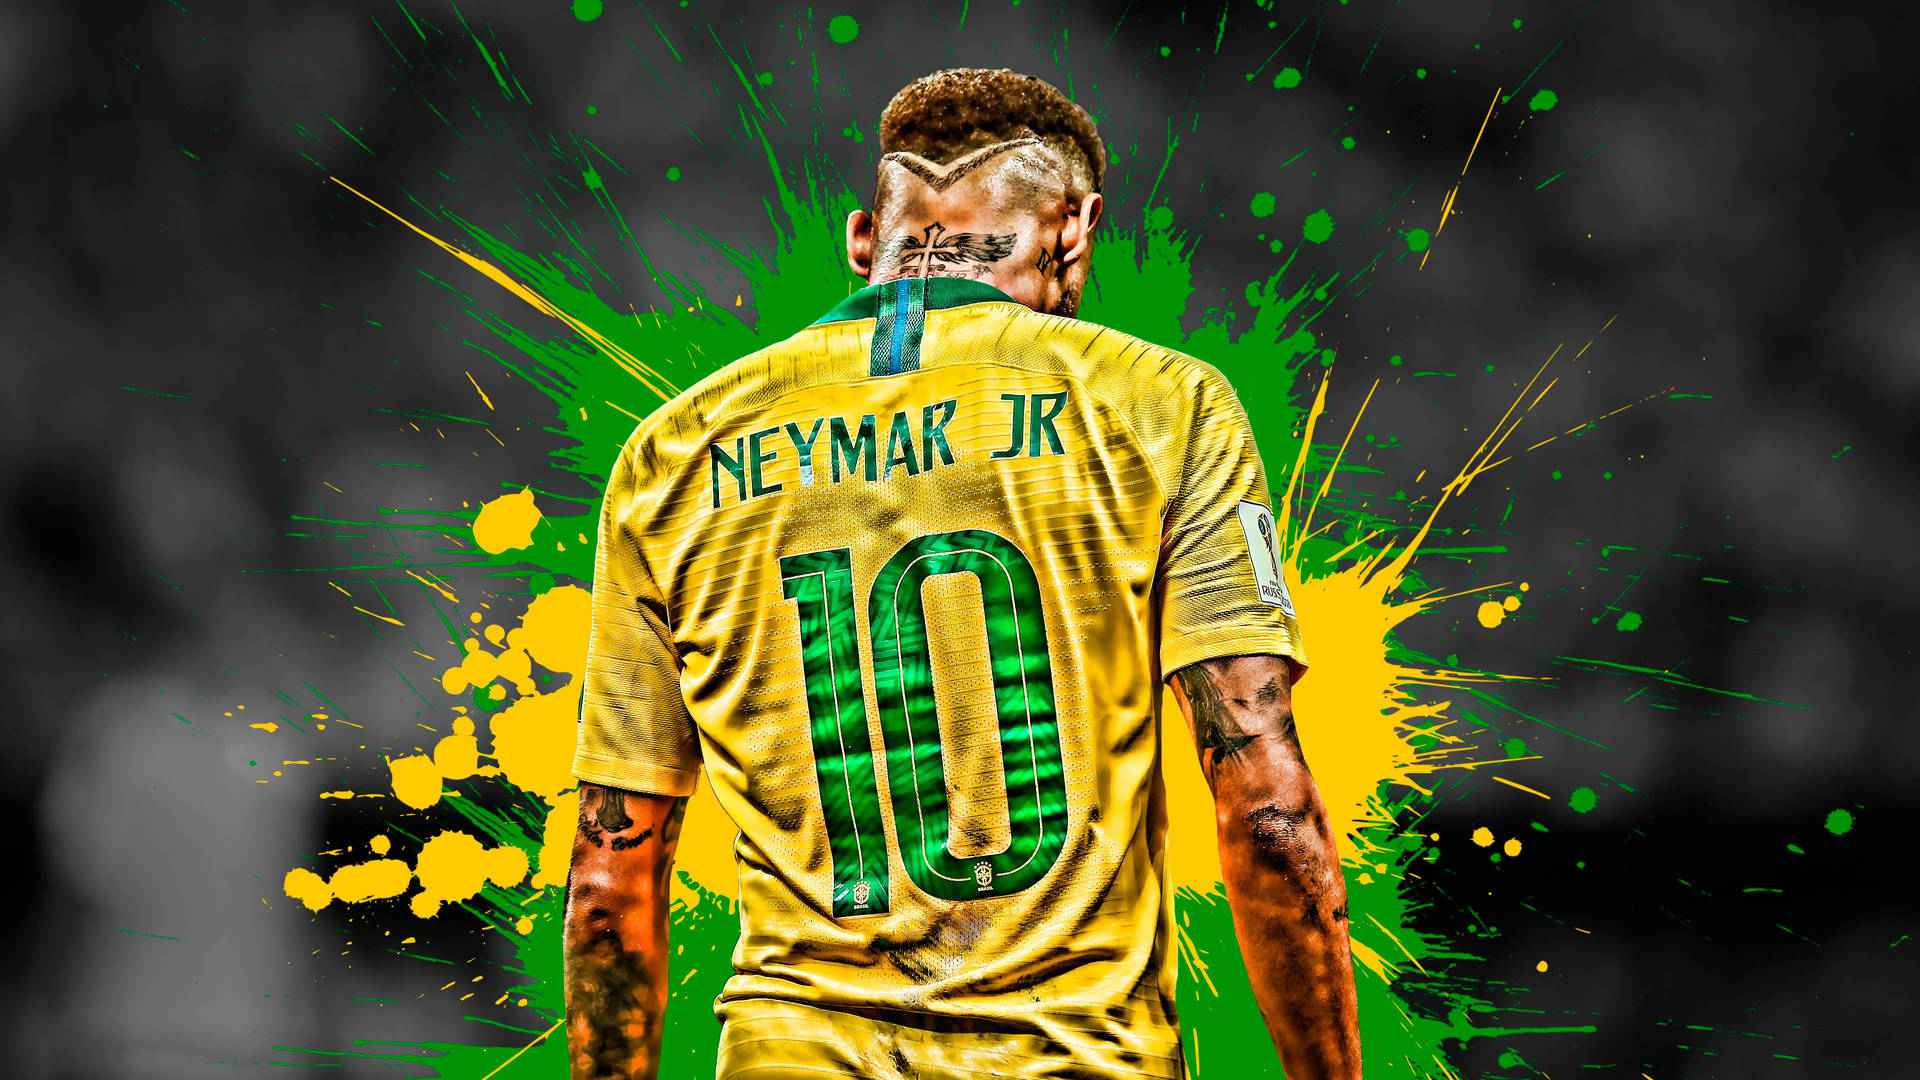 Vibrant 4k Image Of Neymar Jr. With A Splashed Paint Background Background